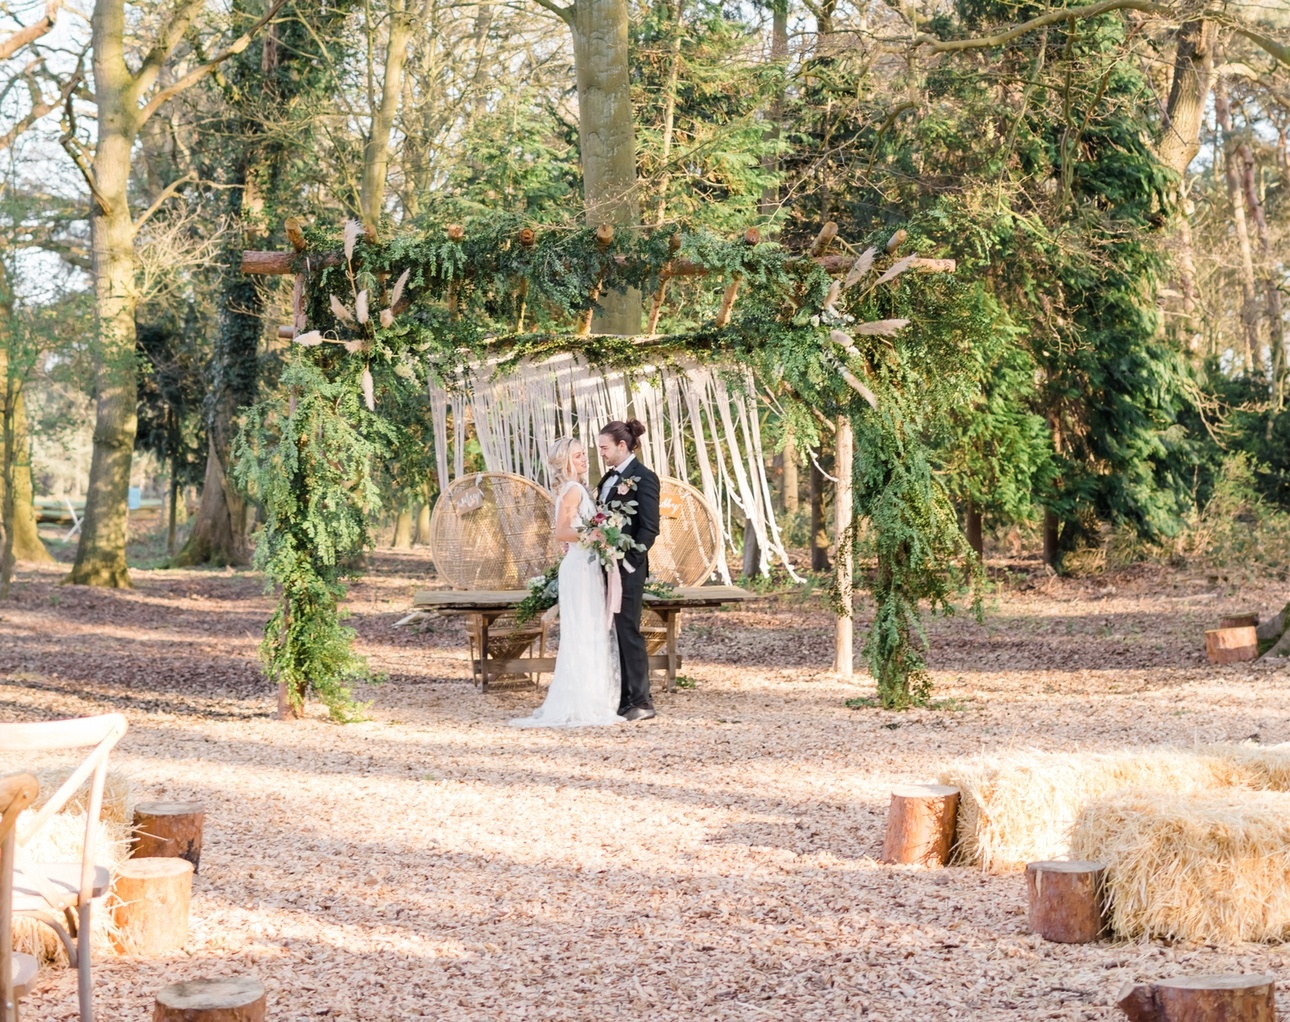 Suffolk woodland wedding venue now licensed for ceremonies: Image 1